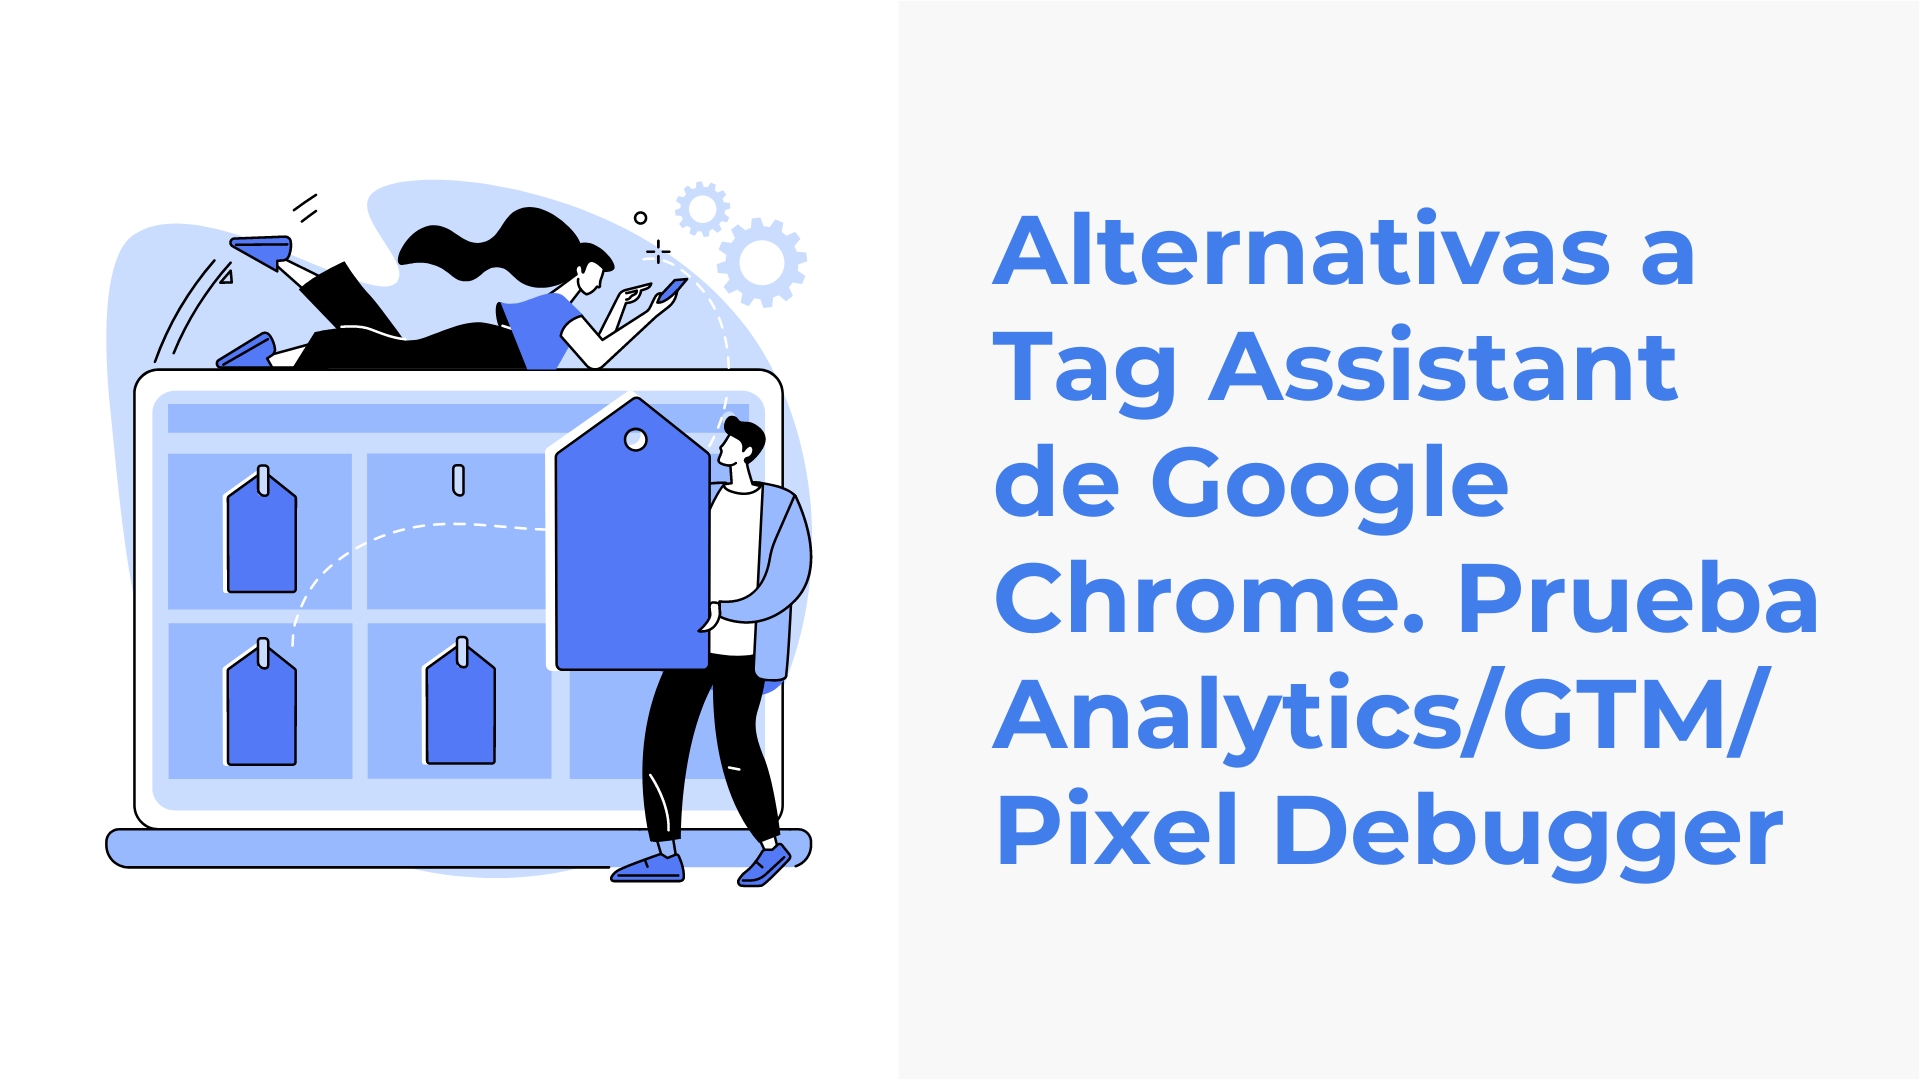 Alternativas a Tag Assistant de Google Chrome. Prueba Analytics:GTM:Pixel Debugger